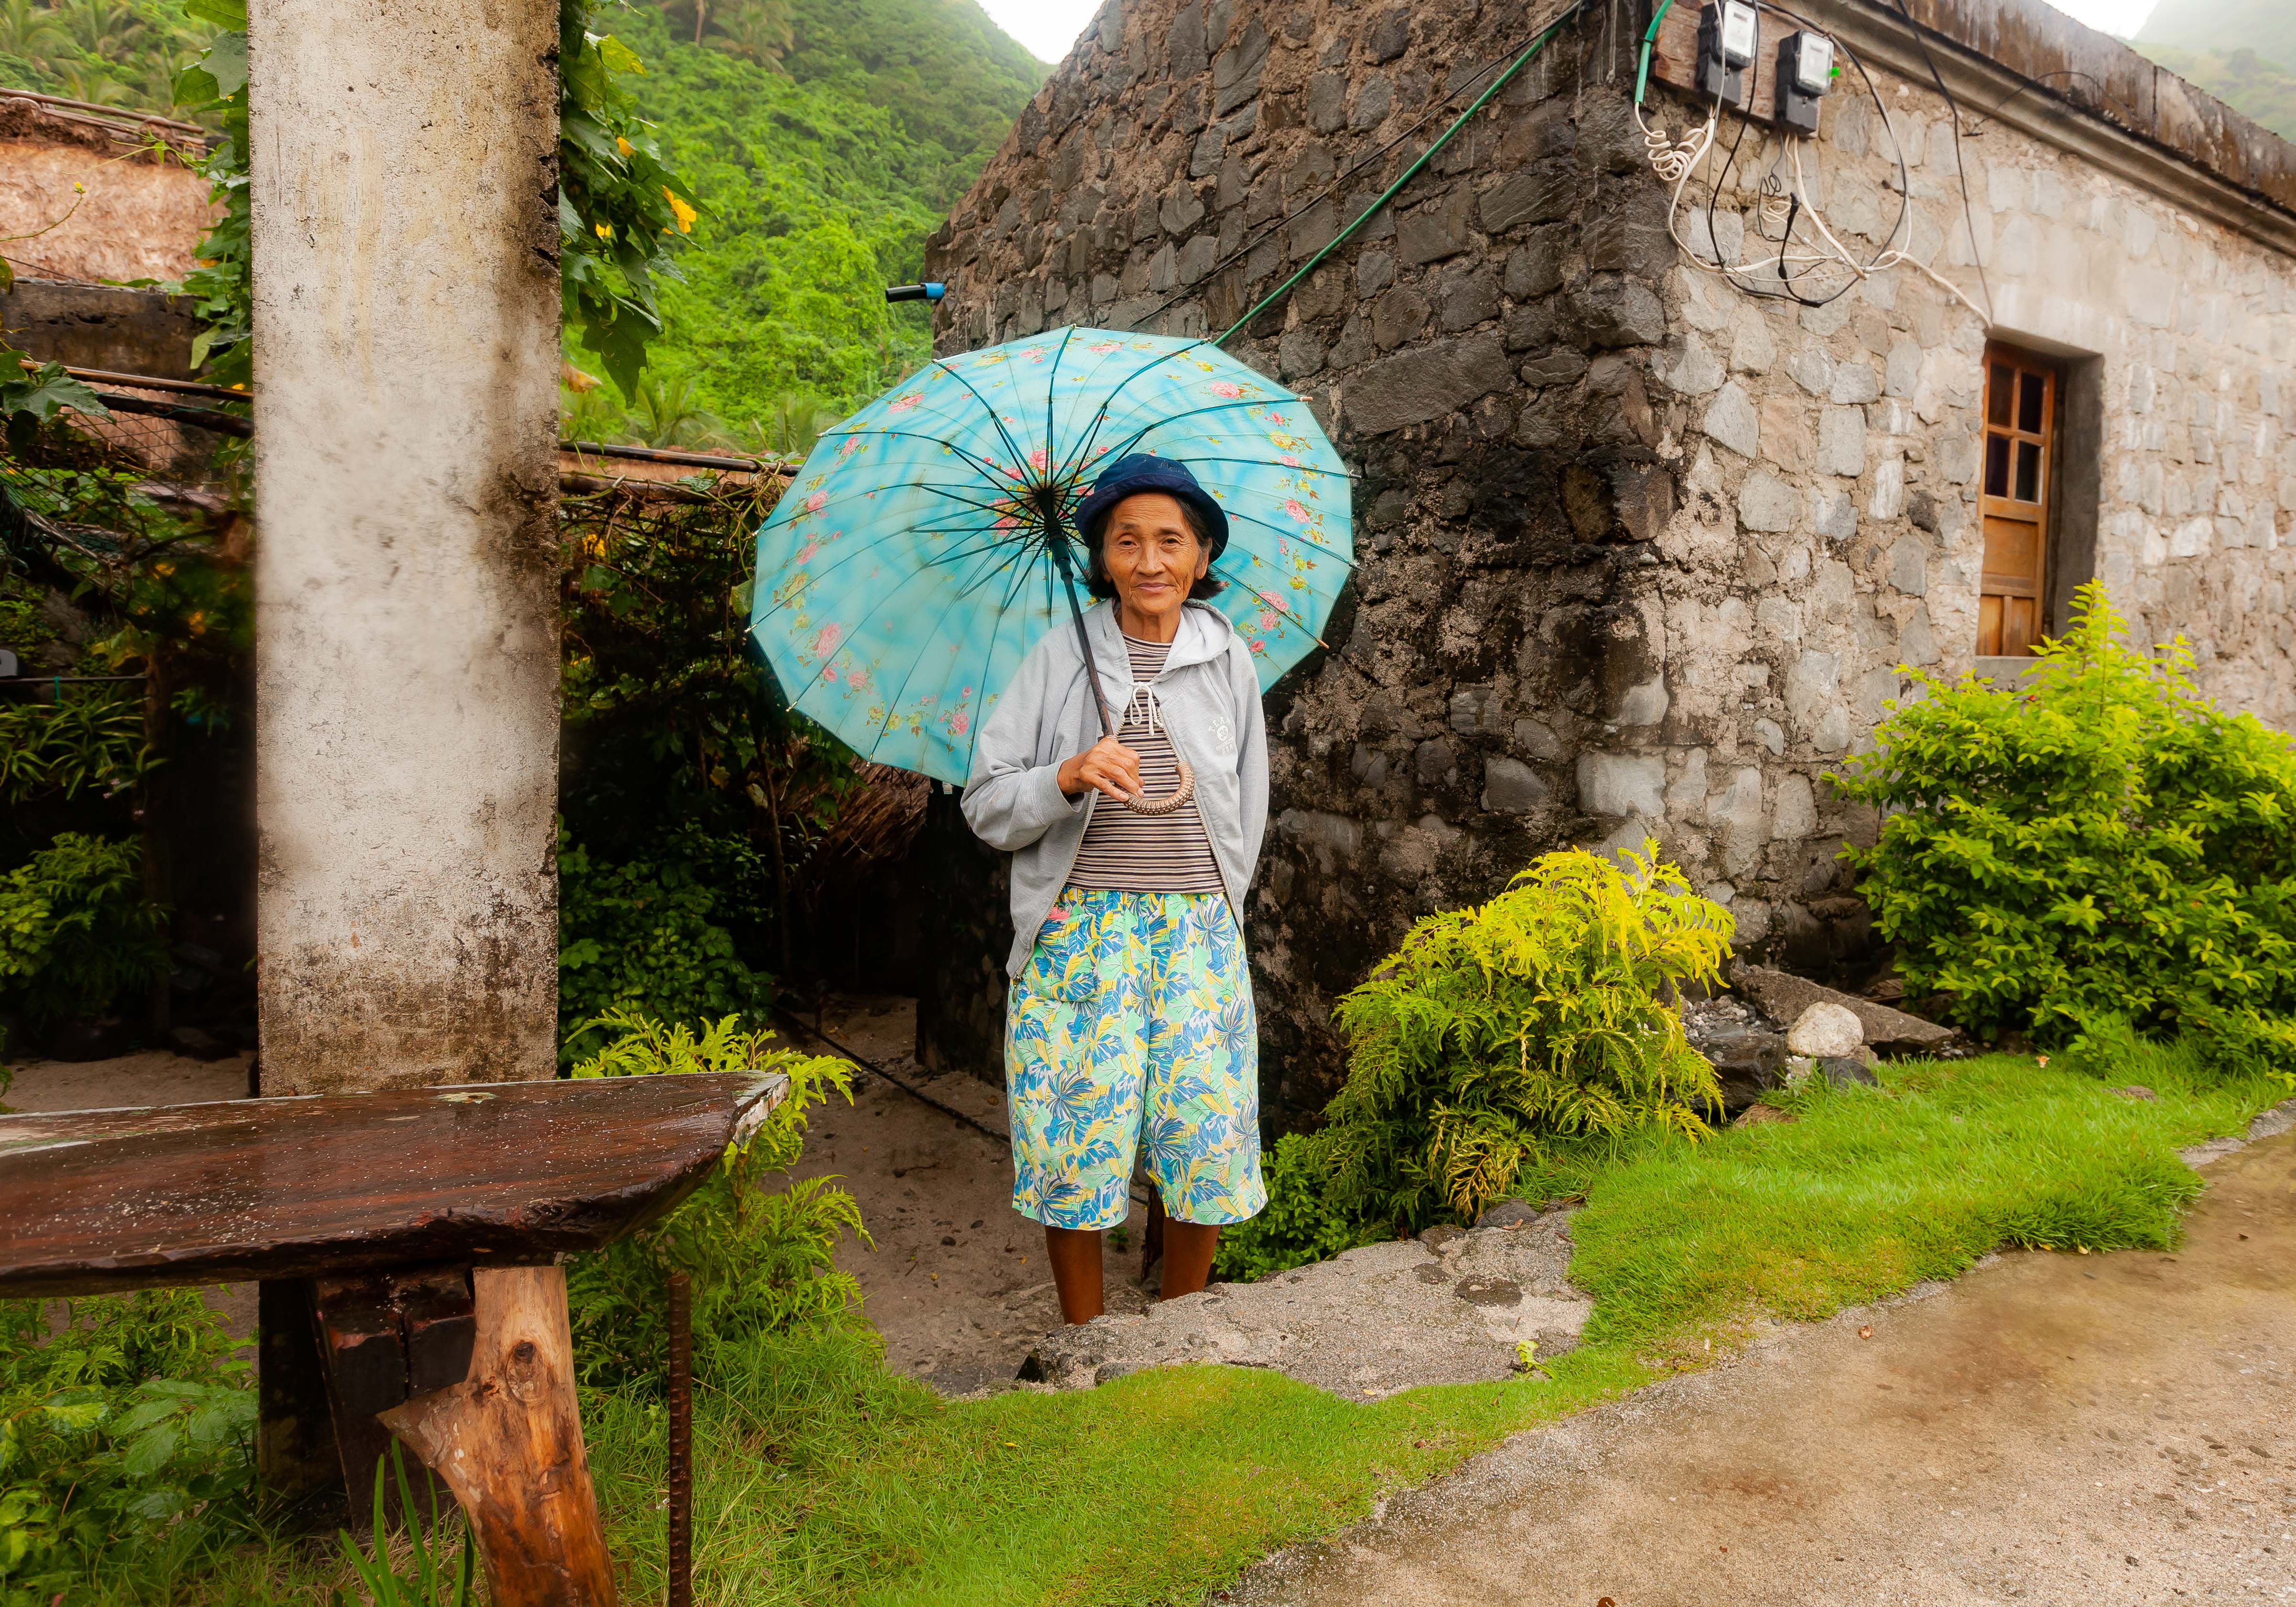 Philippines, Batanes Prov, Woman With Umbrella, 2011, IMG 2061